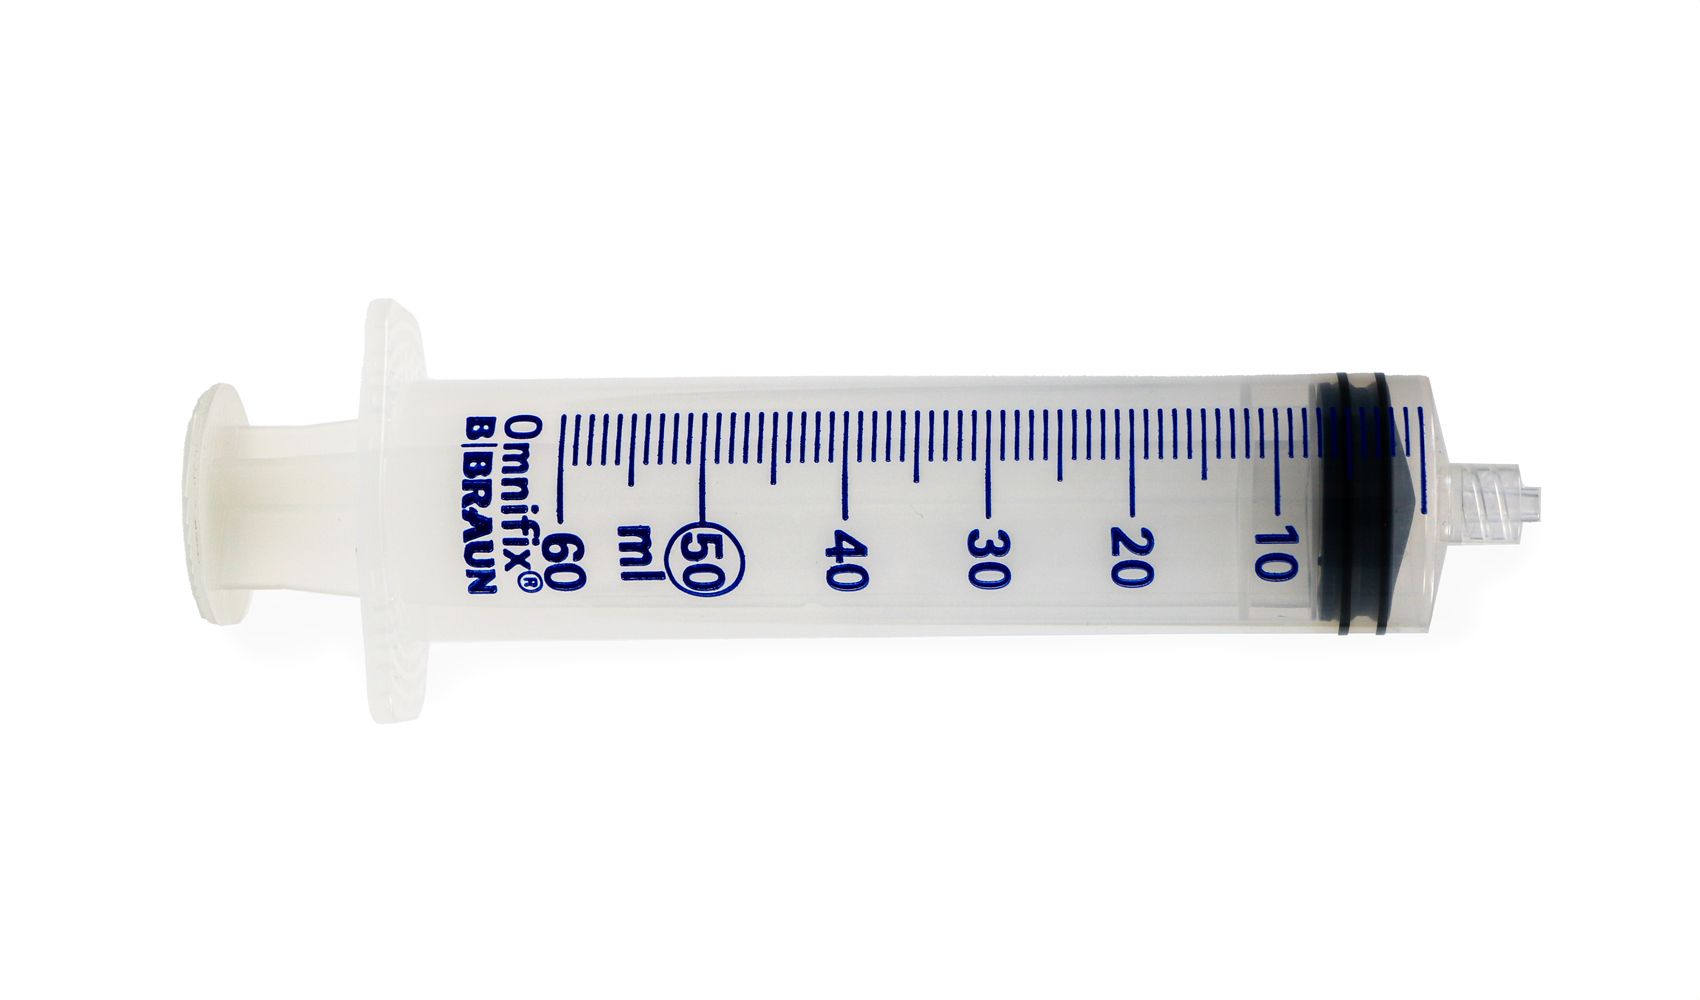 Syringe 50 ml with Luer lock end